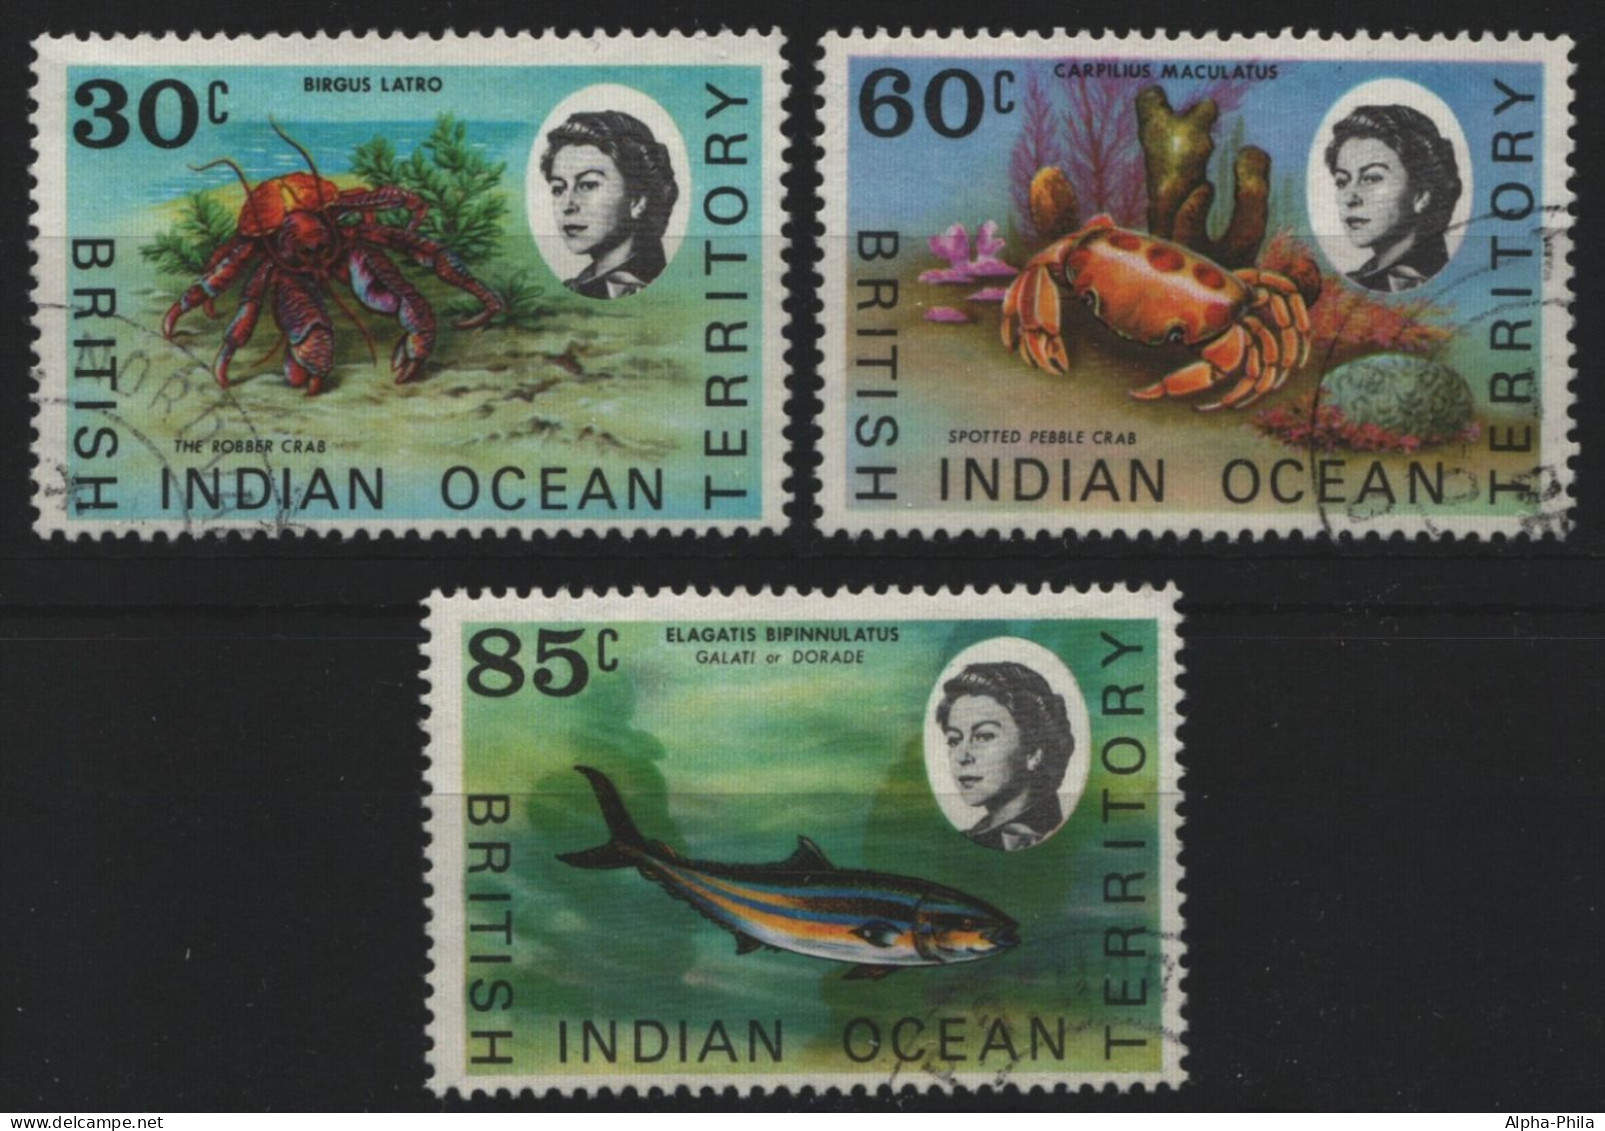 BIOT 1970 - Mi-Nr. 36-38 Gest / Used - Meeresleben / Marine Life - Territorio Britannico Dell'Oceano Indiano